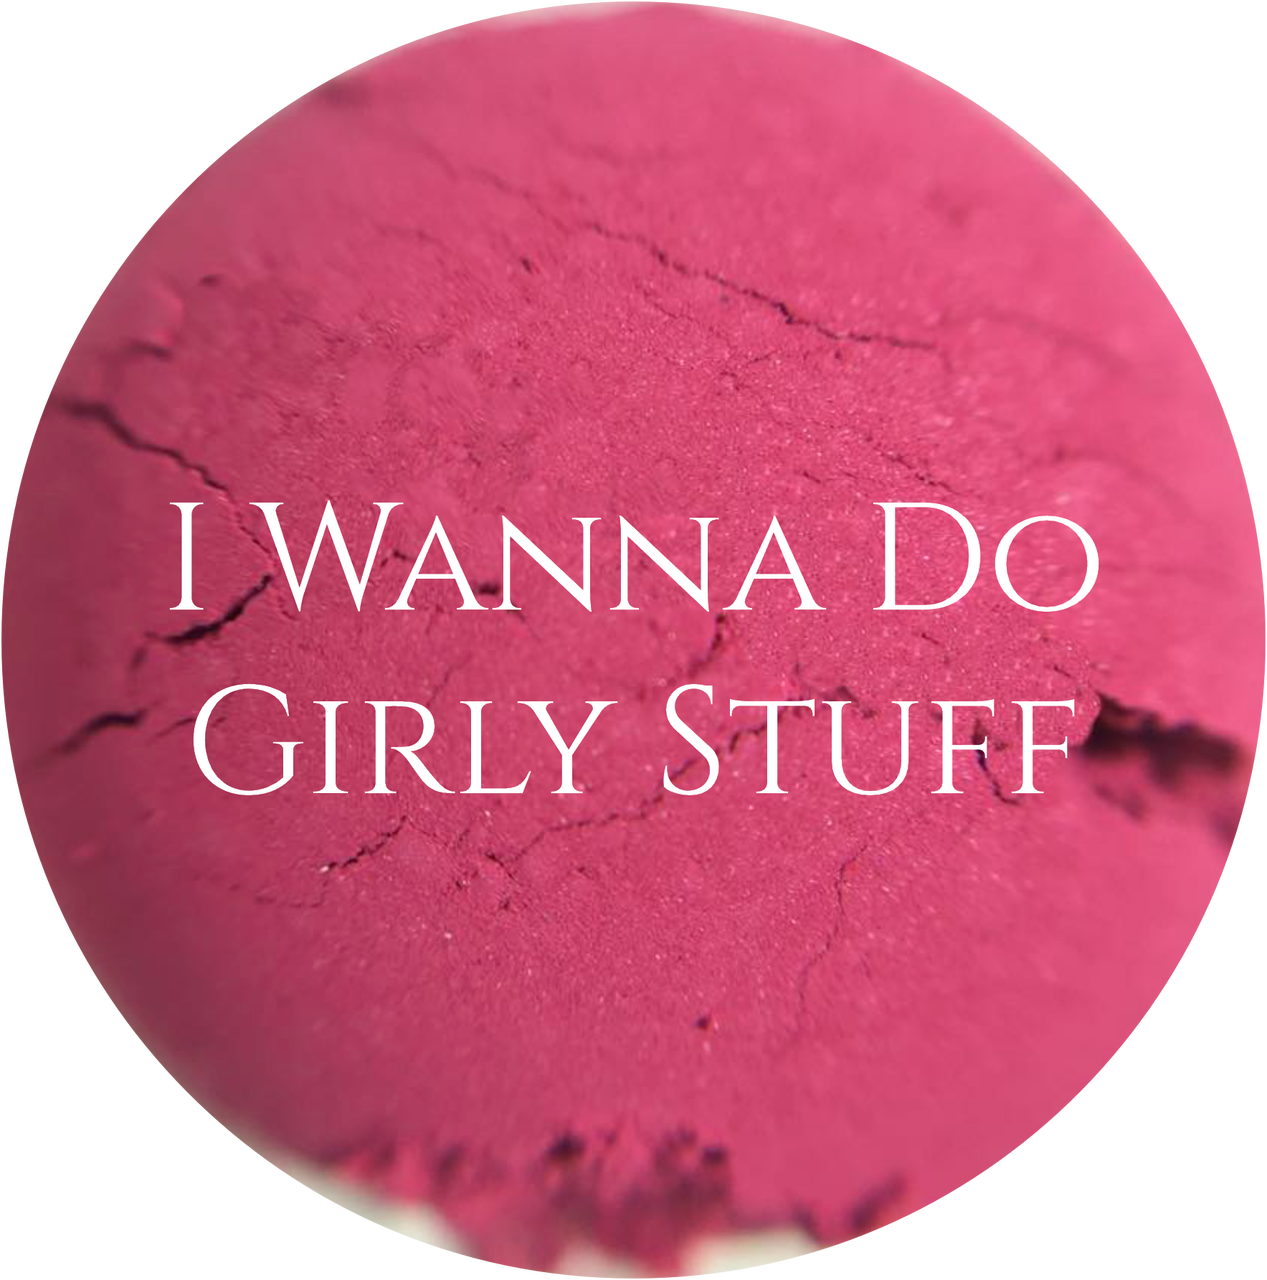 Girly Stuff Pink Makeup Compact PNG